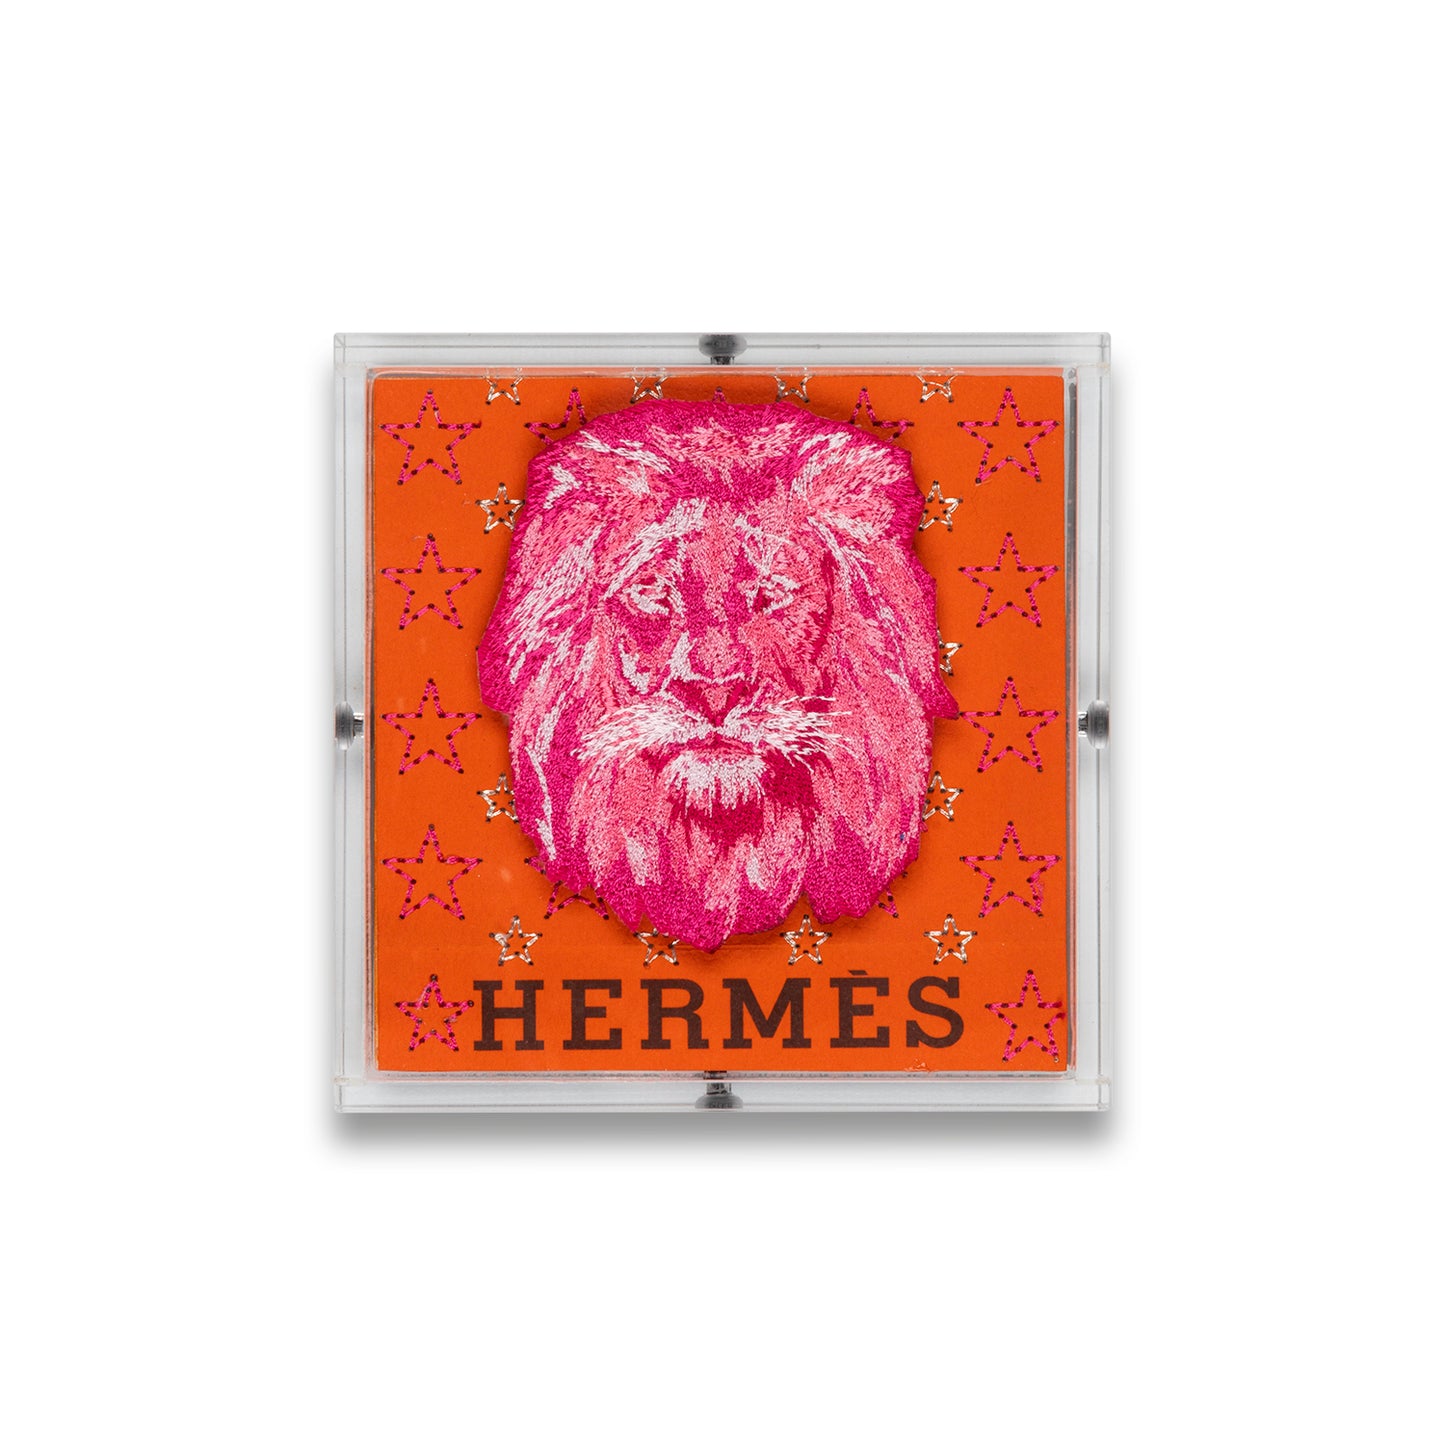 Petite Pink Hermes Strength by Stephen Wilson (5x5x2")